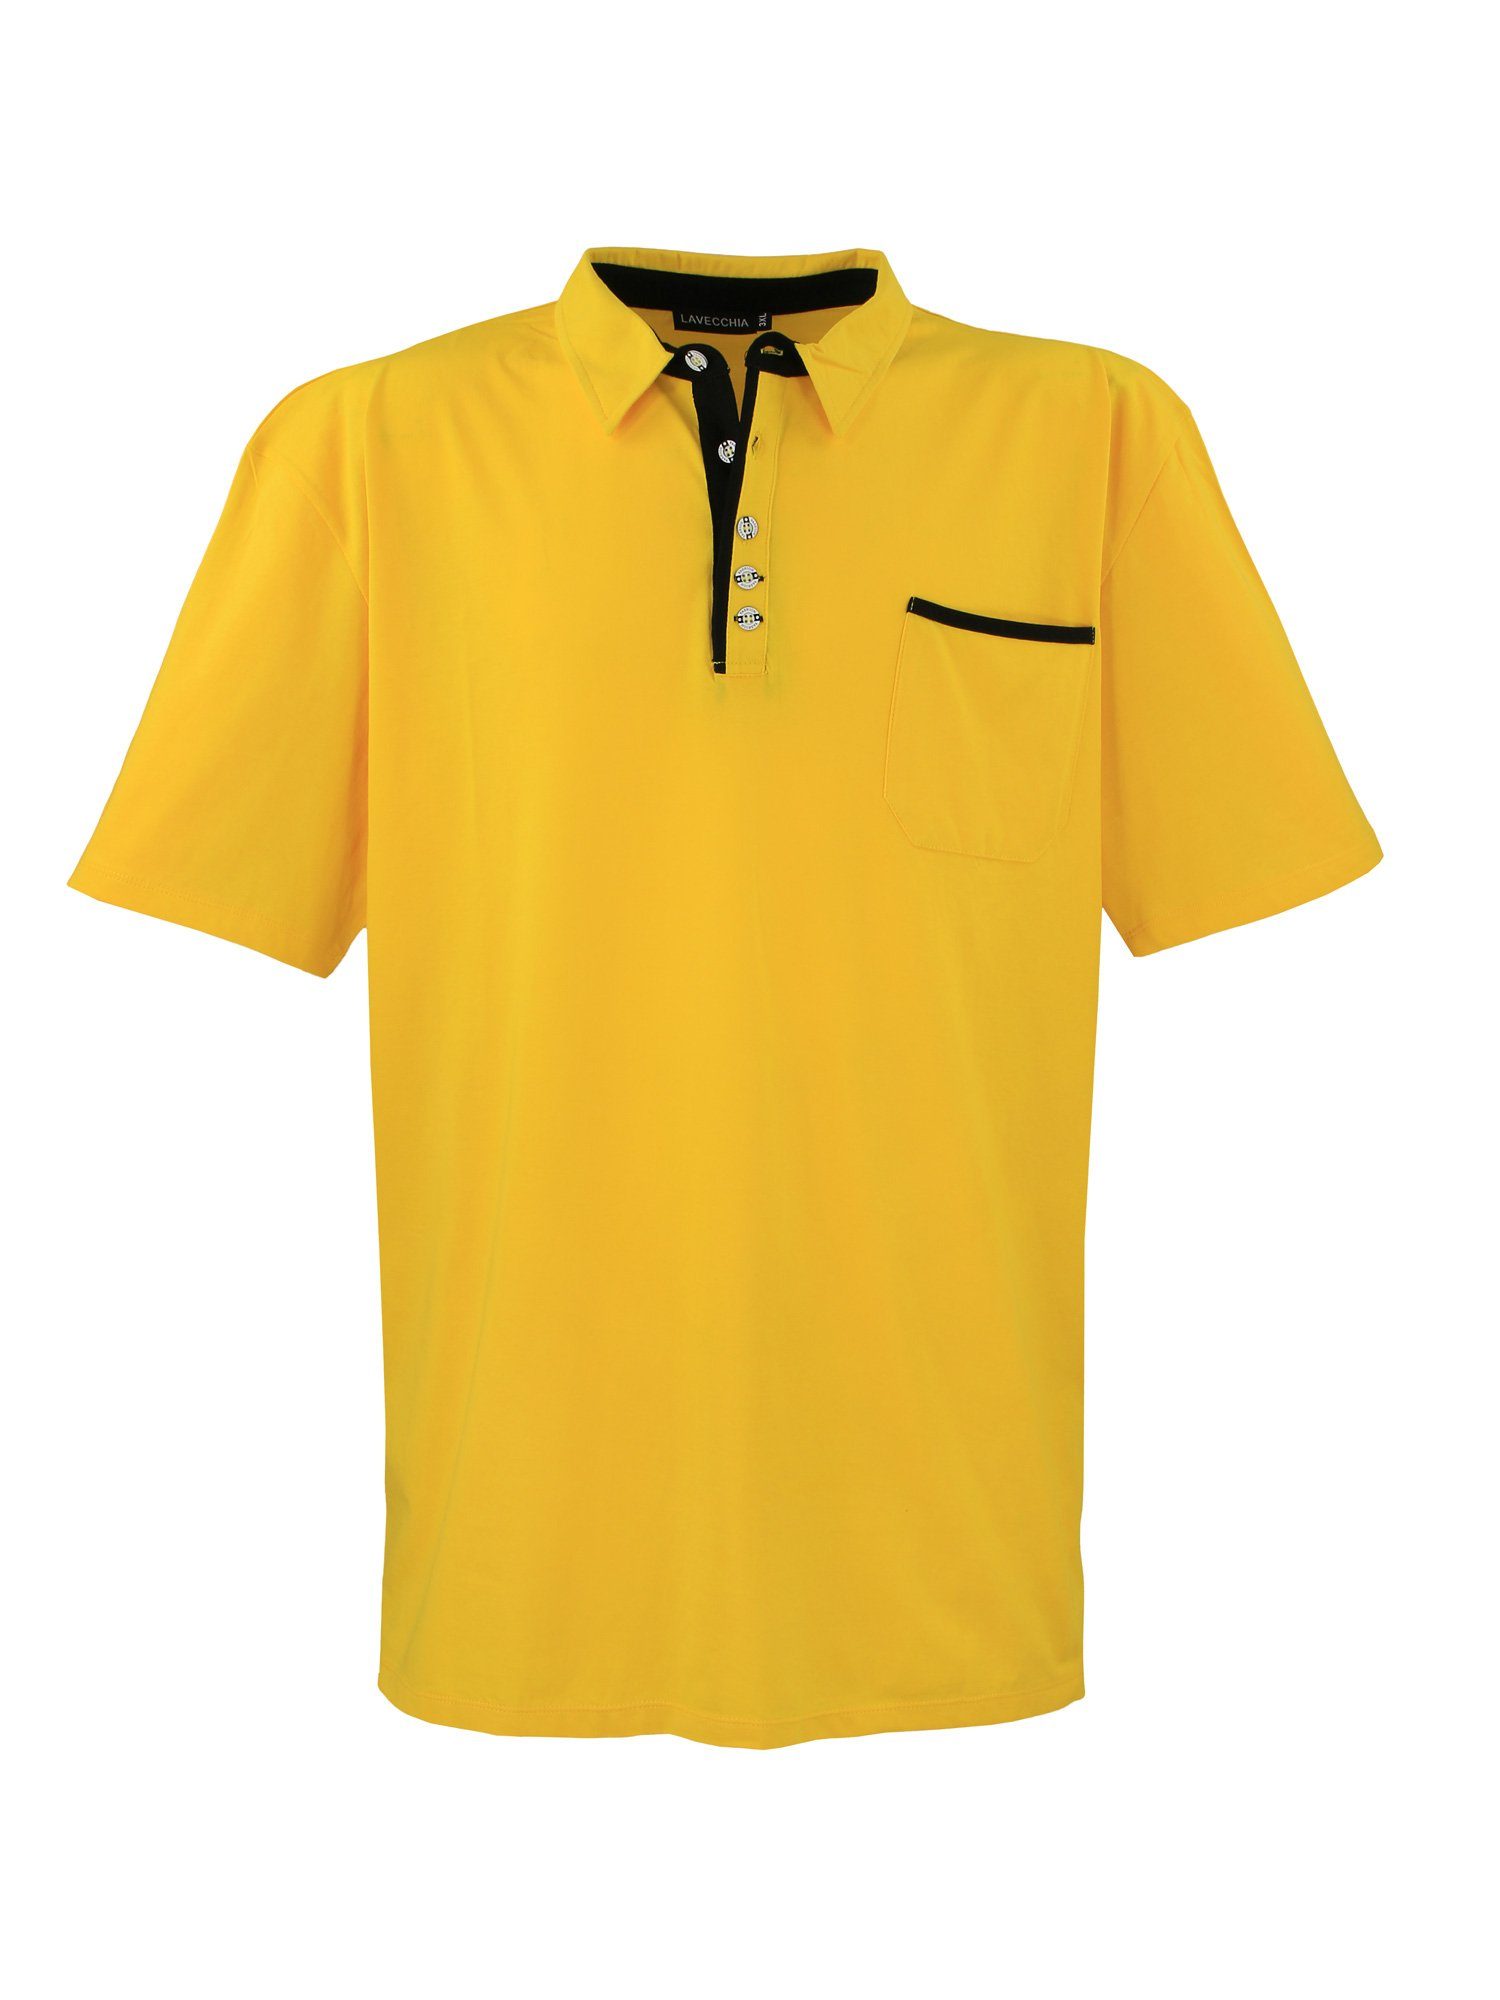 Lavecchia Poloshirt Übergrößen Herren Polo Shirt LV-1701 Herren Polo Shirt gelb